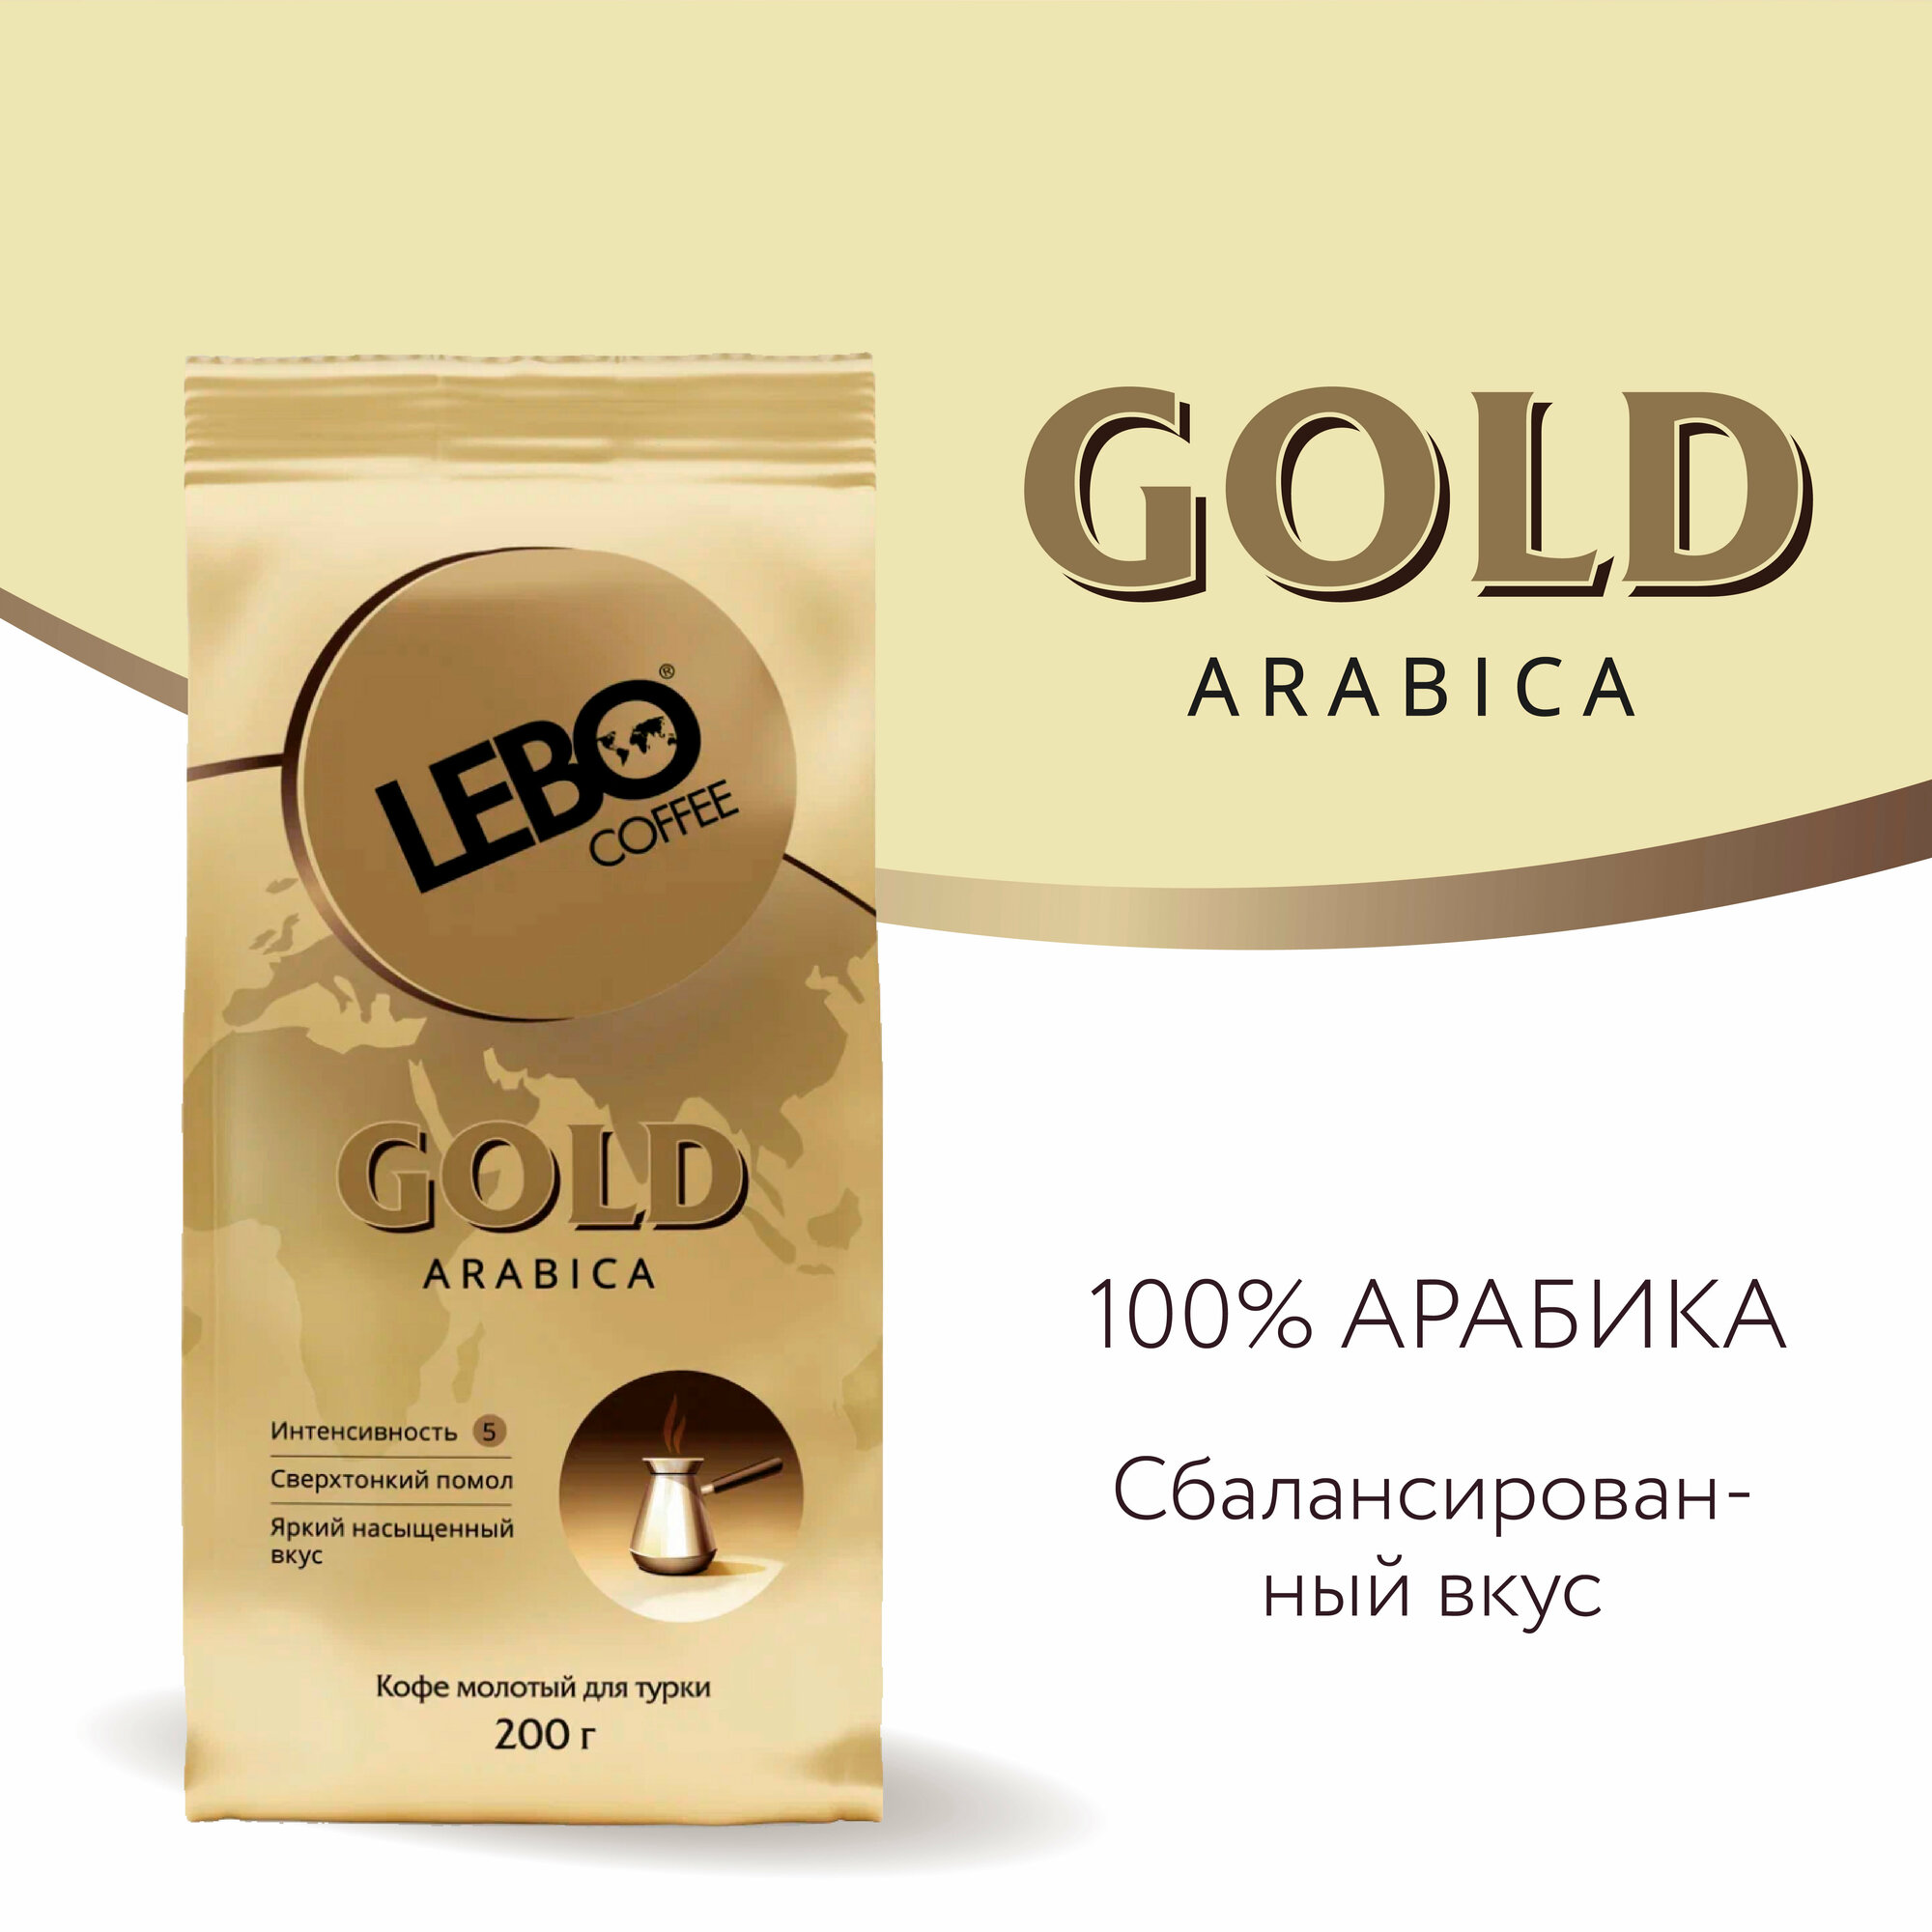 Кофе молотый Lebo Gold Arabica 200г - фото №1